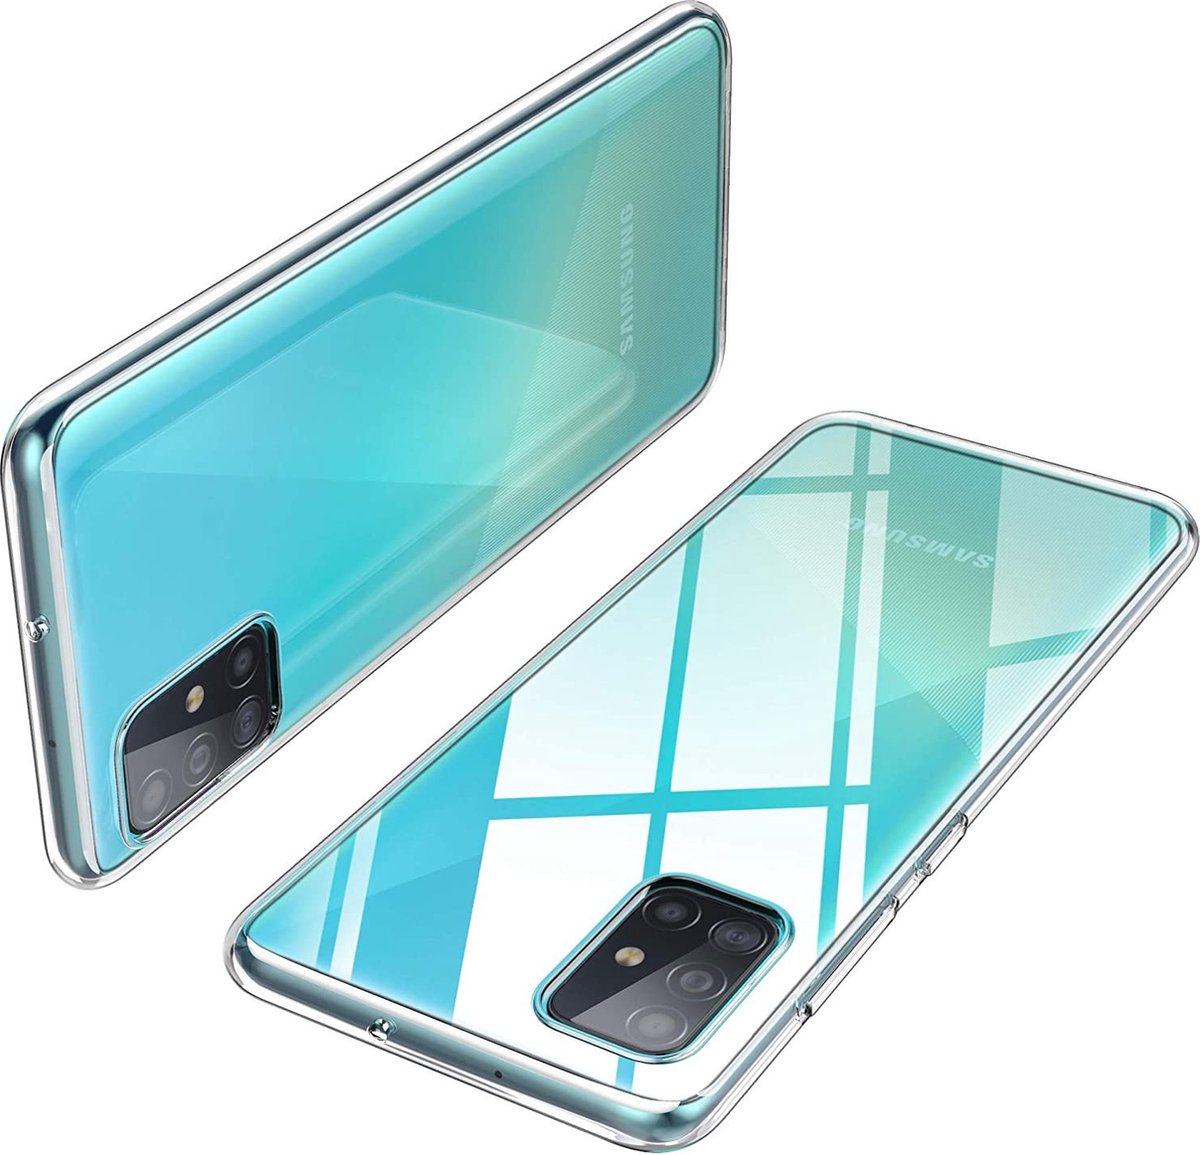 Samsung Galaxy A51 Hoesje Transparante Hoesje – Protection Cover Case – Telefoonhoesje met Achterkant & Zijkant bescherming – Transparante Beschermhoes - Bescherming Tegen Krassen & Stoten – Crystal Clear